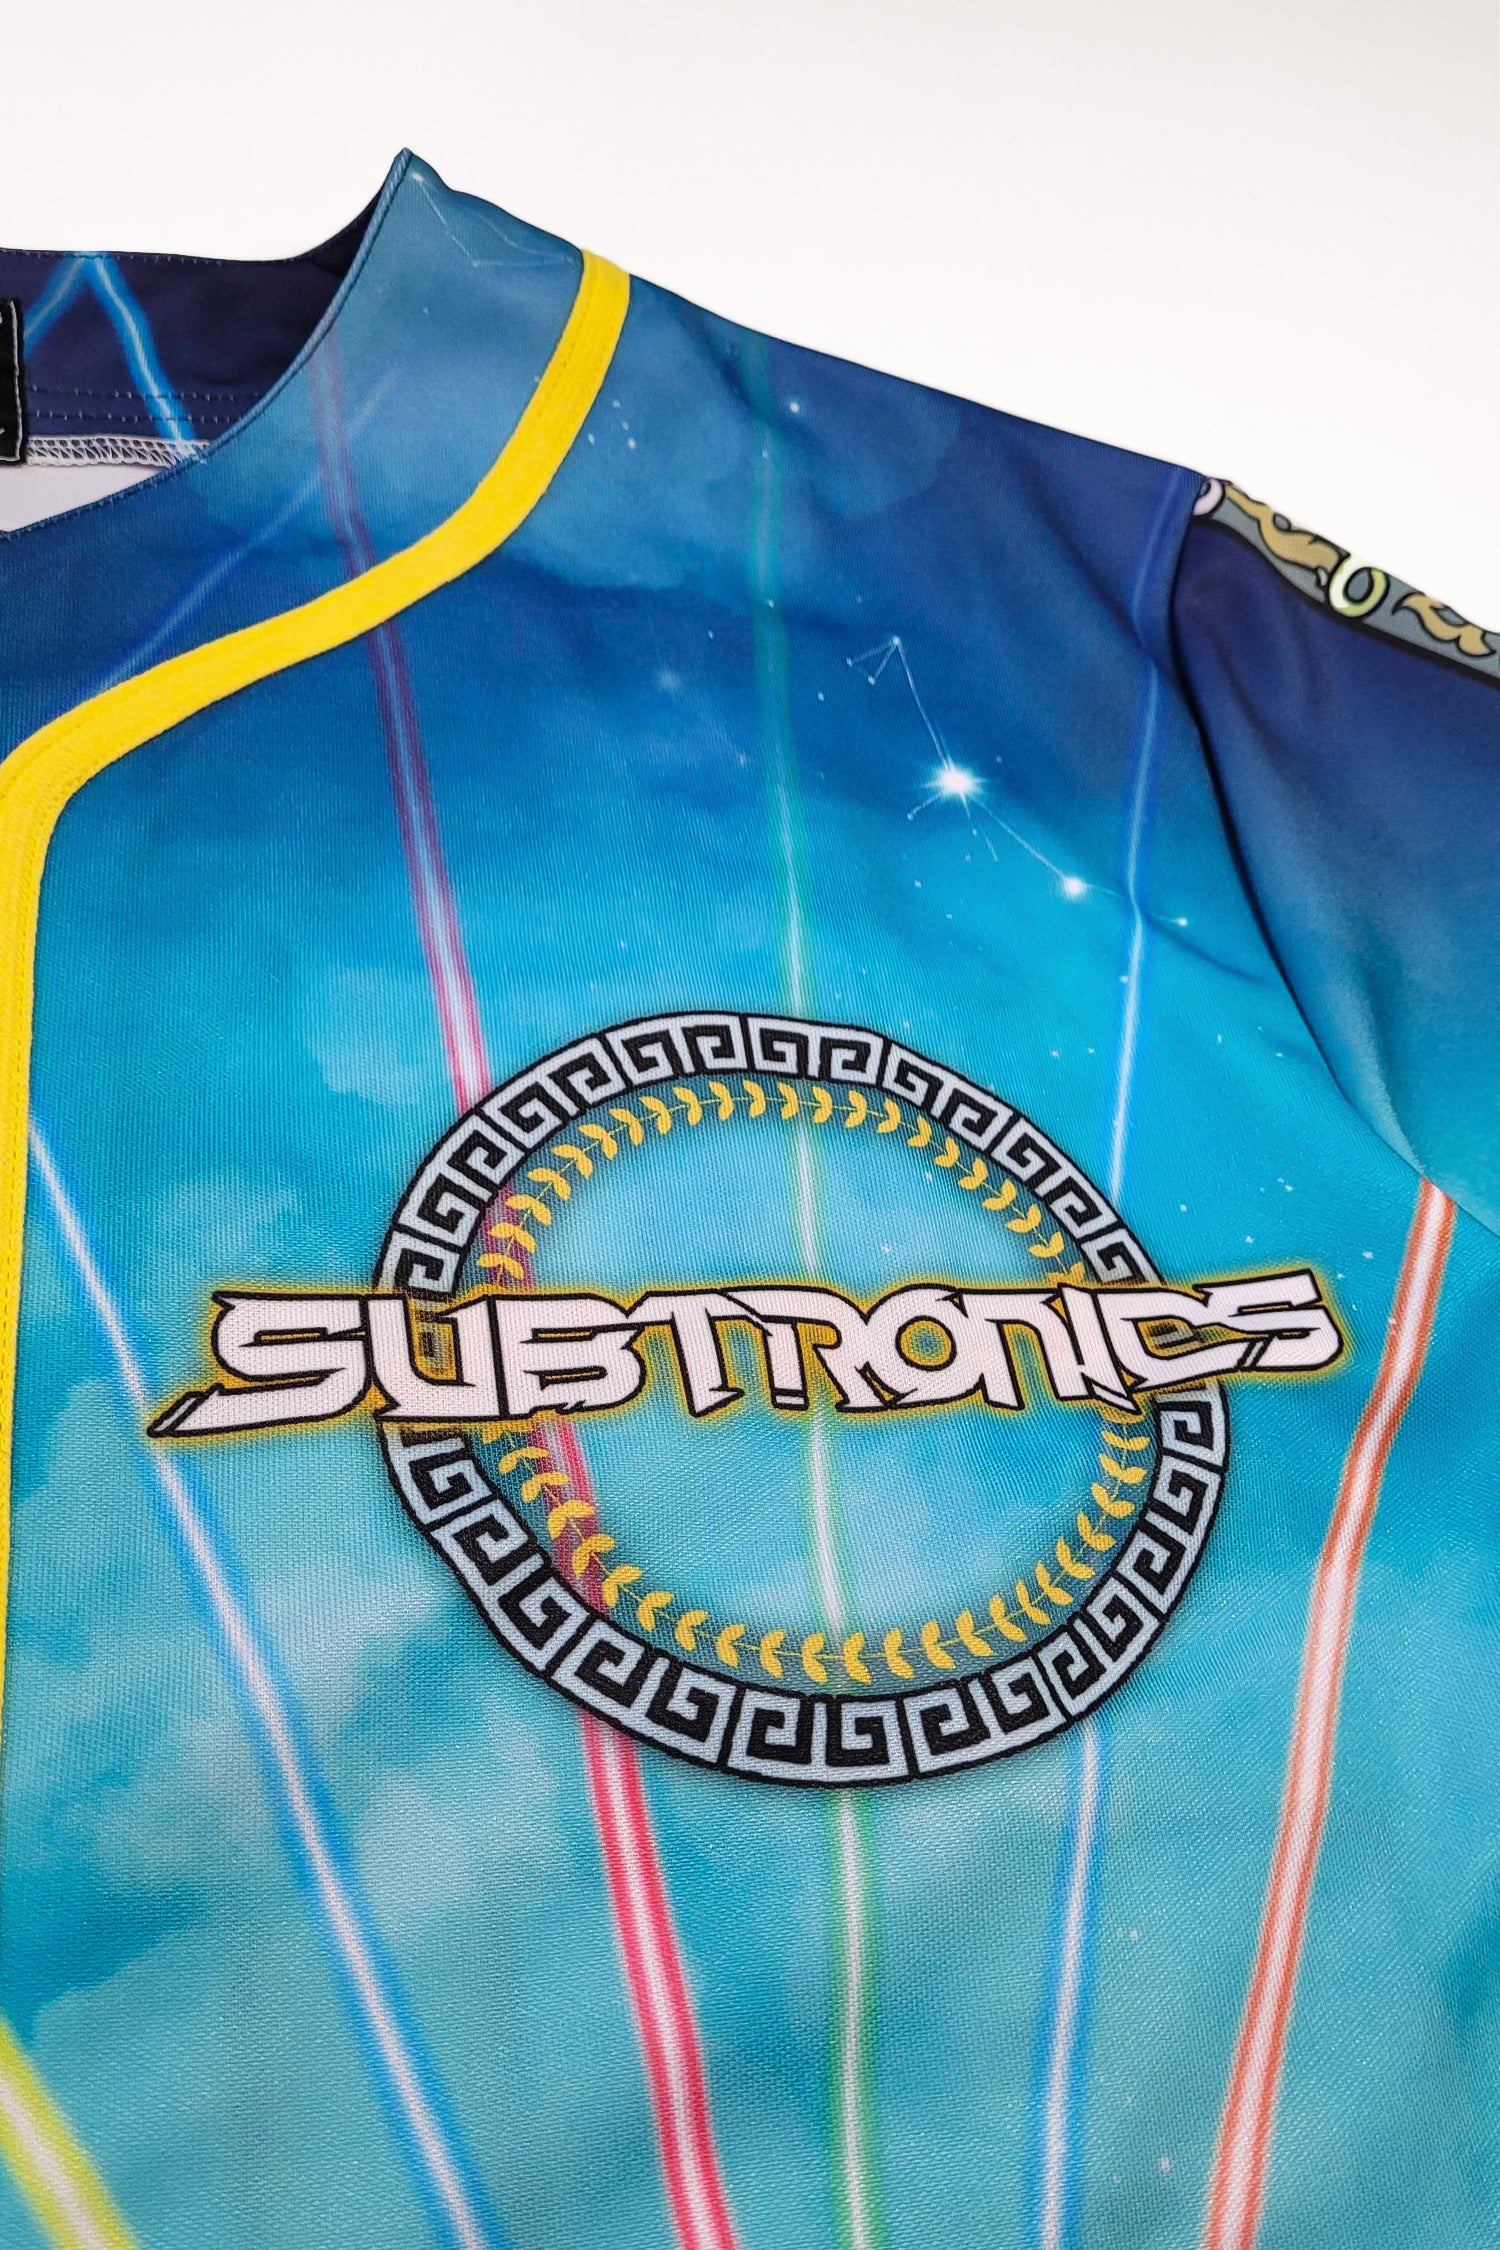 Subtronics - Cyclops Coliseum Baseball Jersey